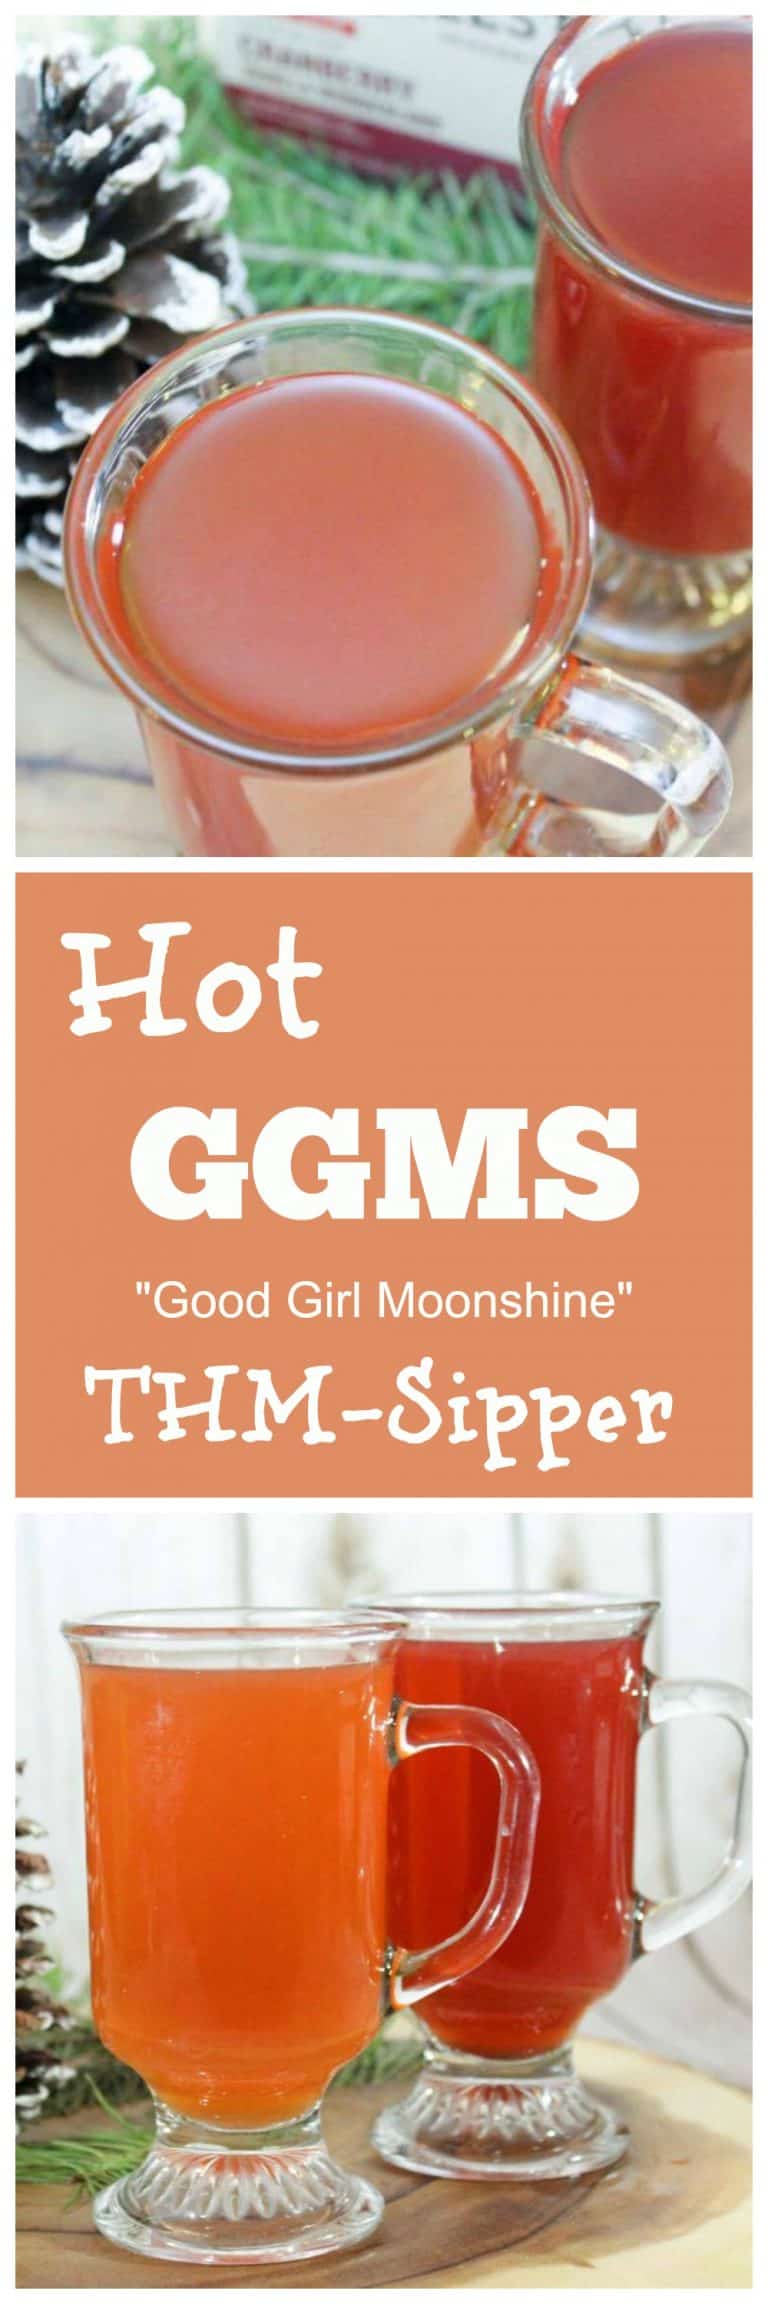 Hot Good Girl Moonshine (THM-Sipper, GGMS)